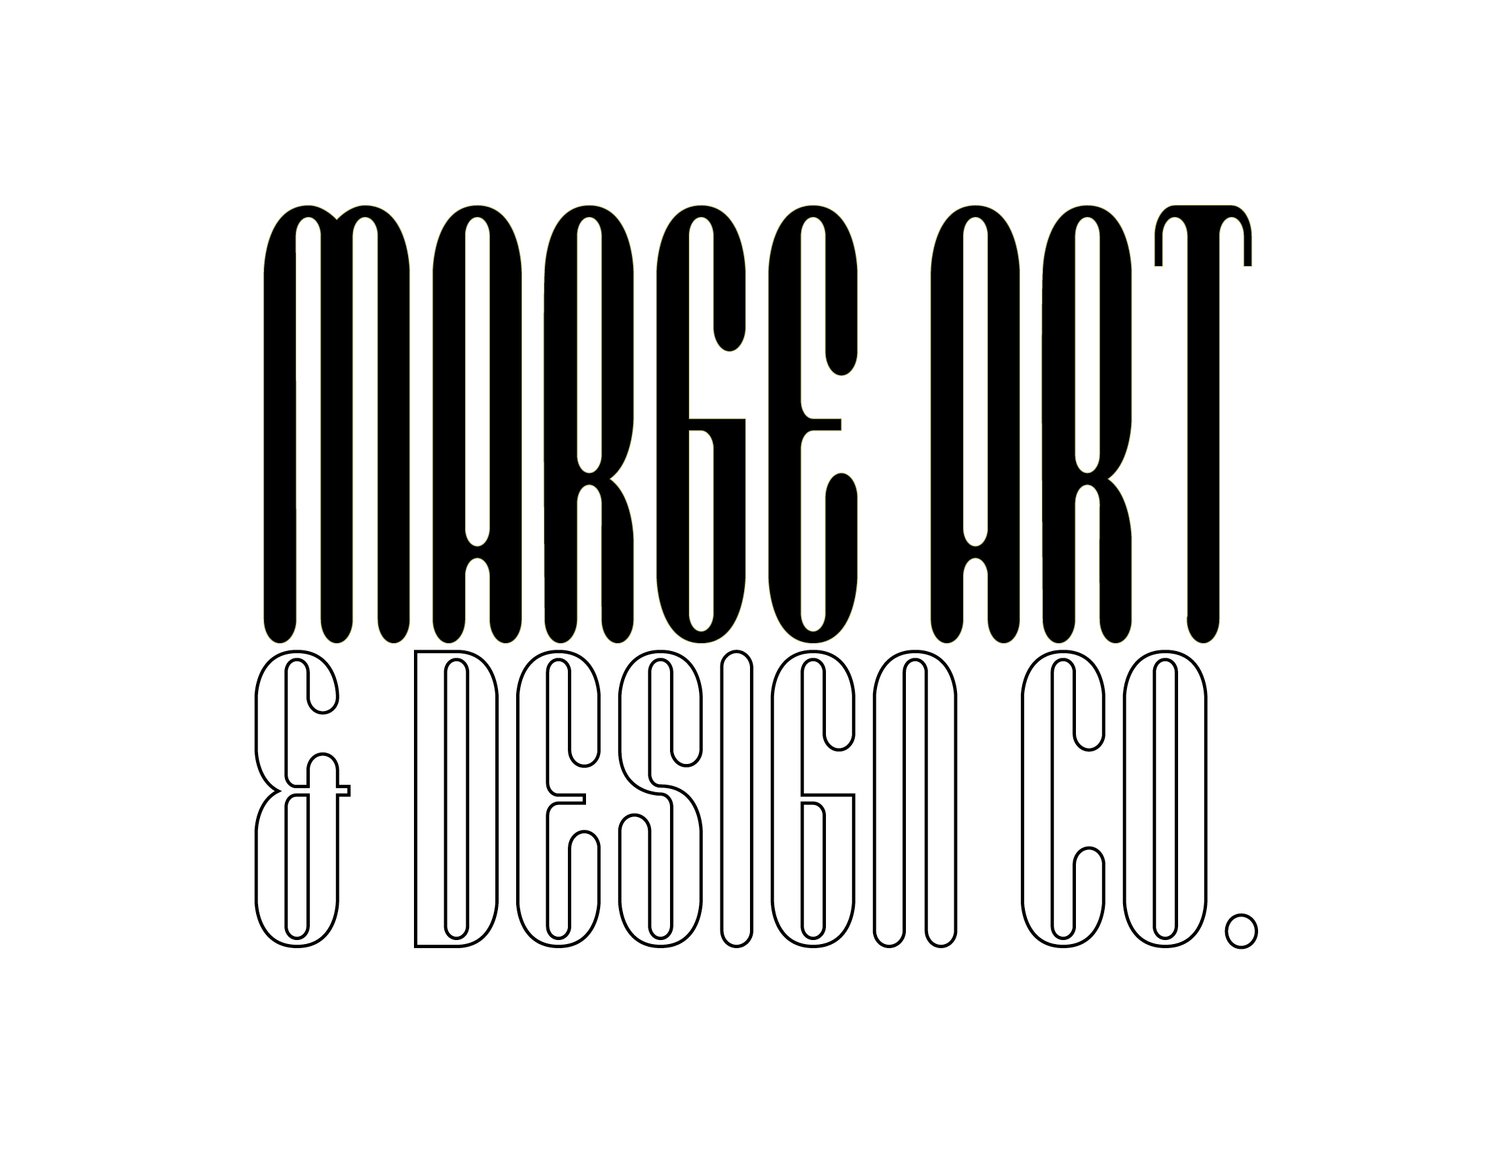 MARGE ART